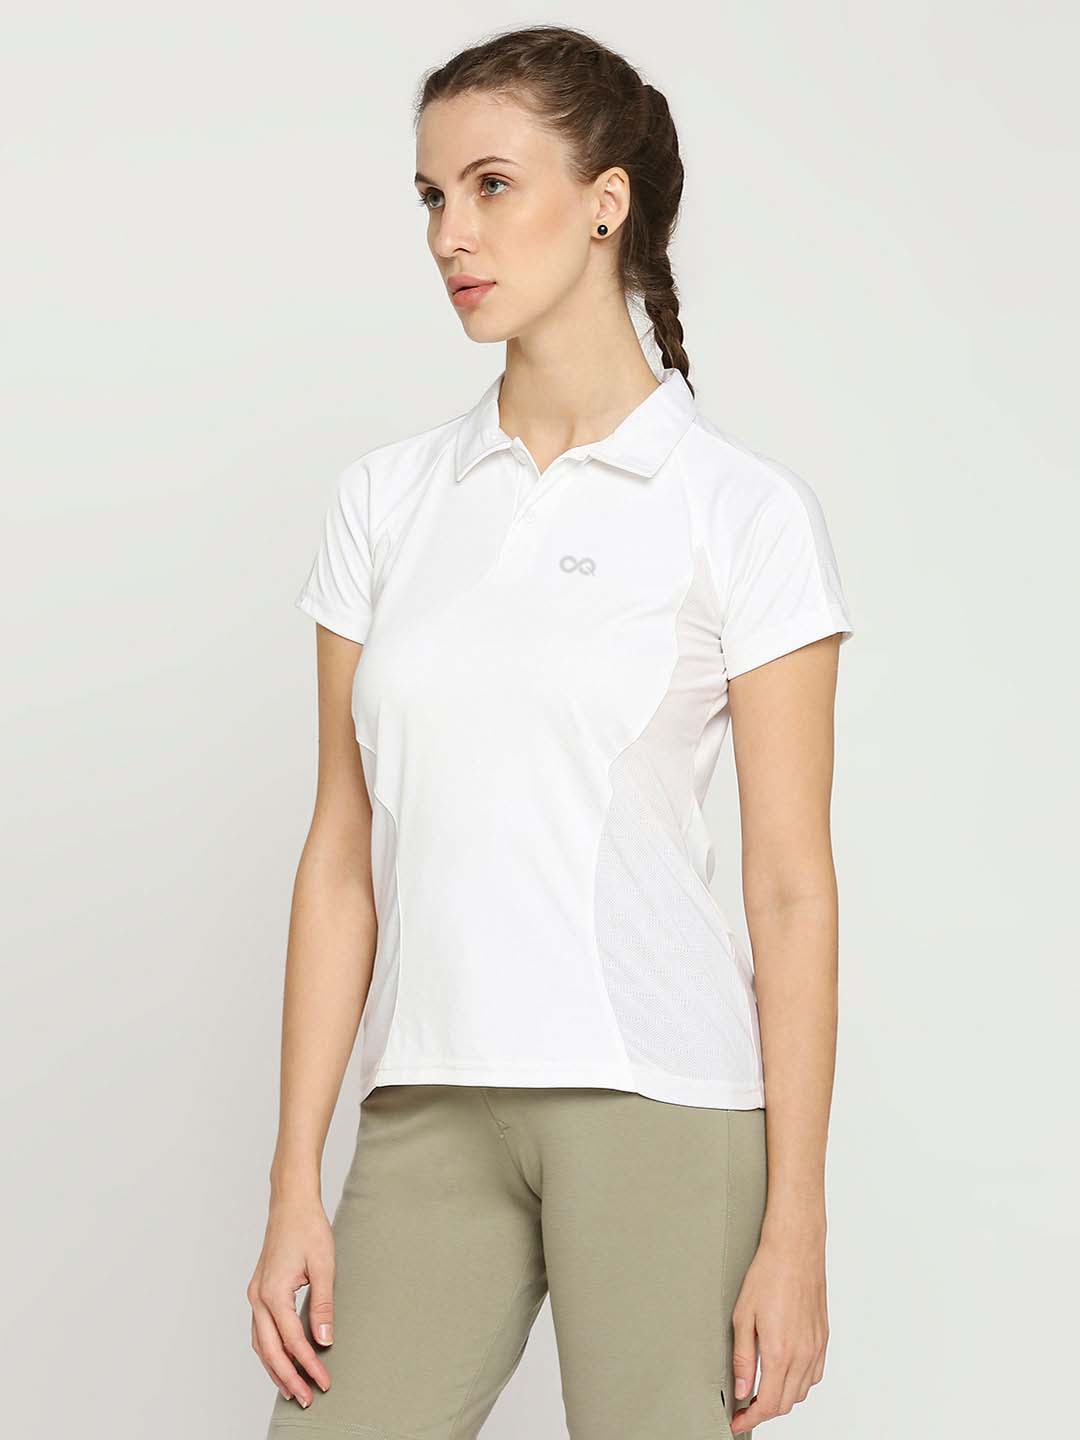 Women's Golf Polo Shirt with Mesh - White